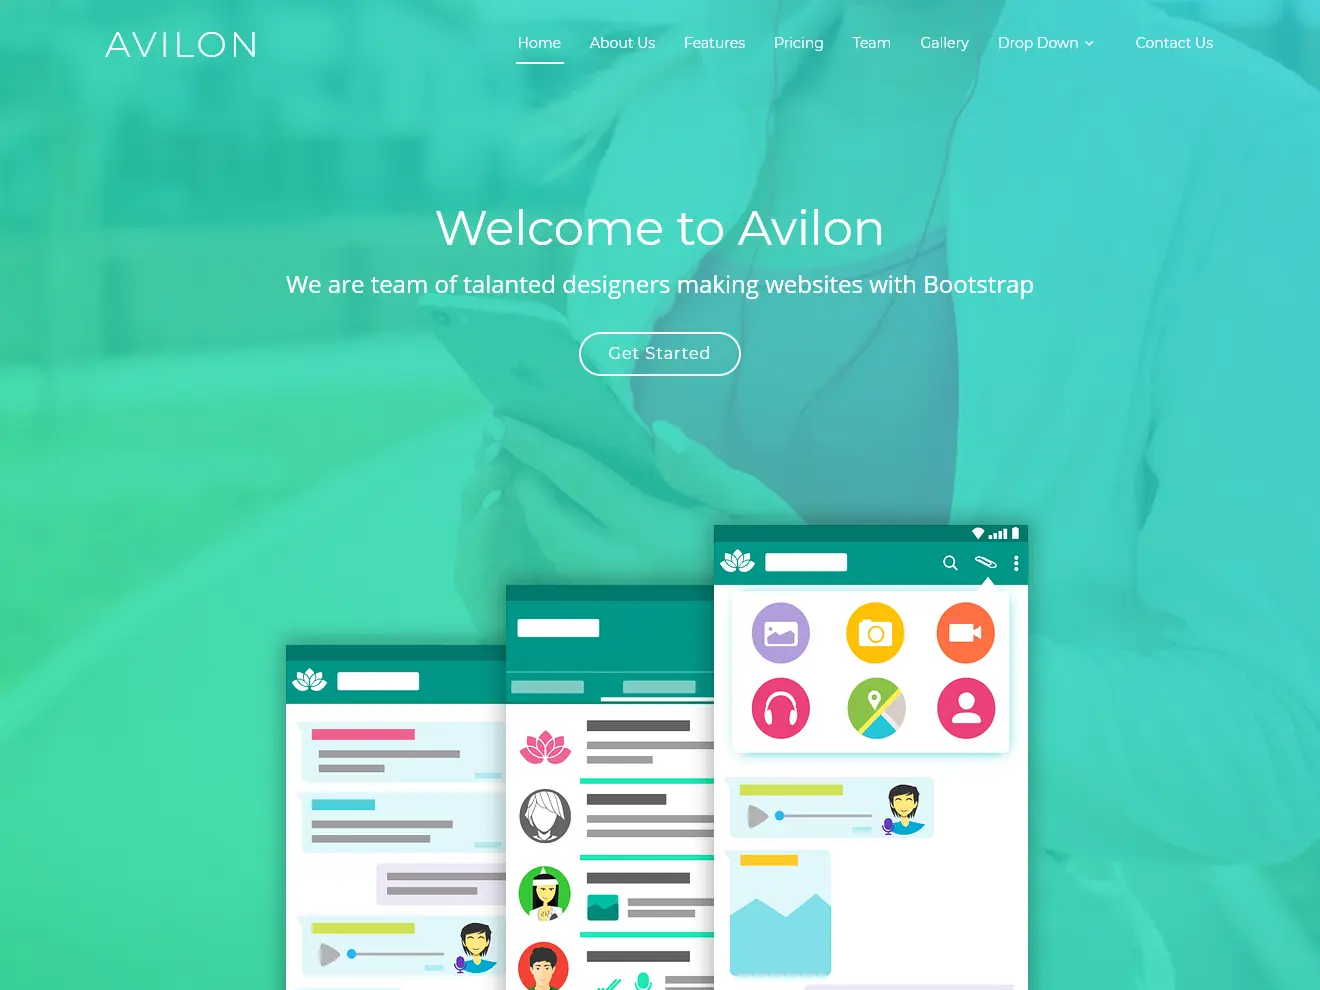 Avilon Bootstrap Landing Page Template